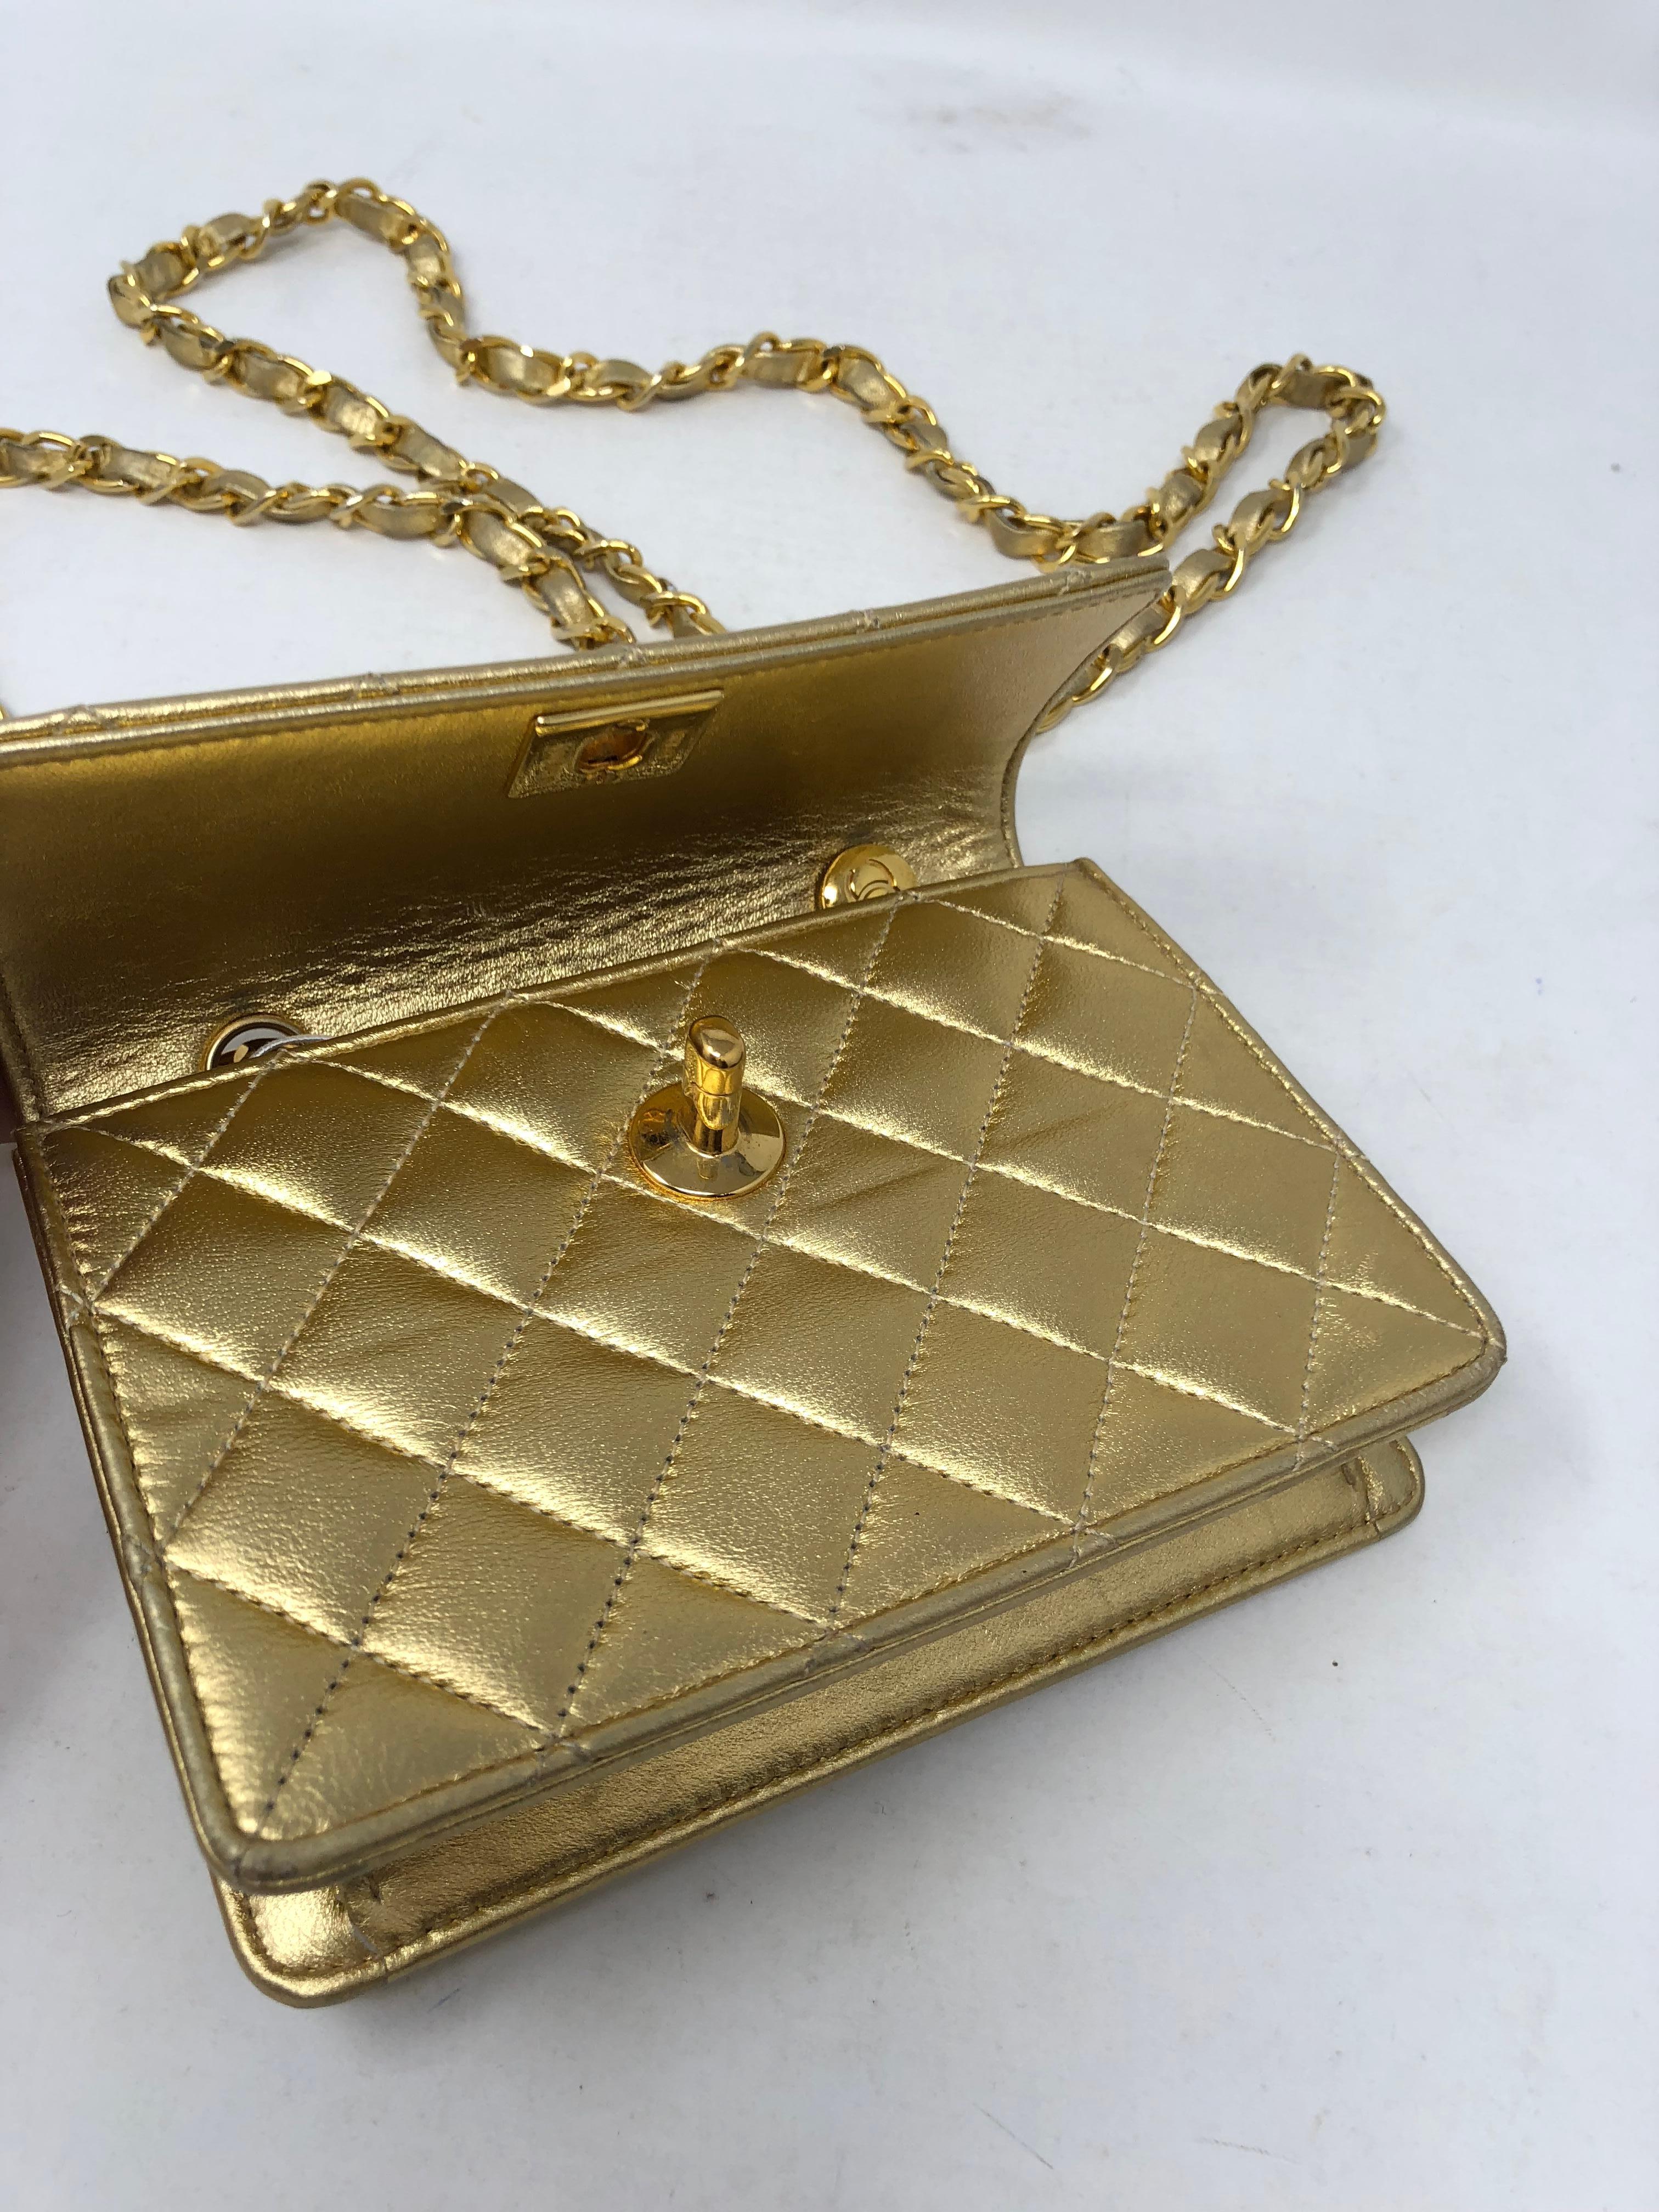 Women's or Men's Chanel Mini Gold Leather Crossbody Bag